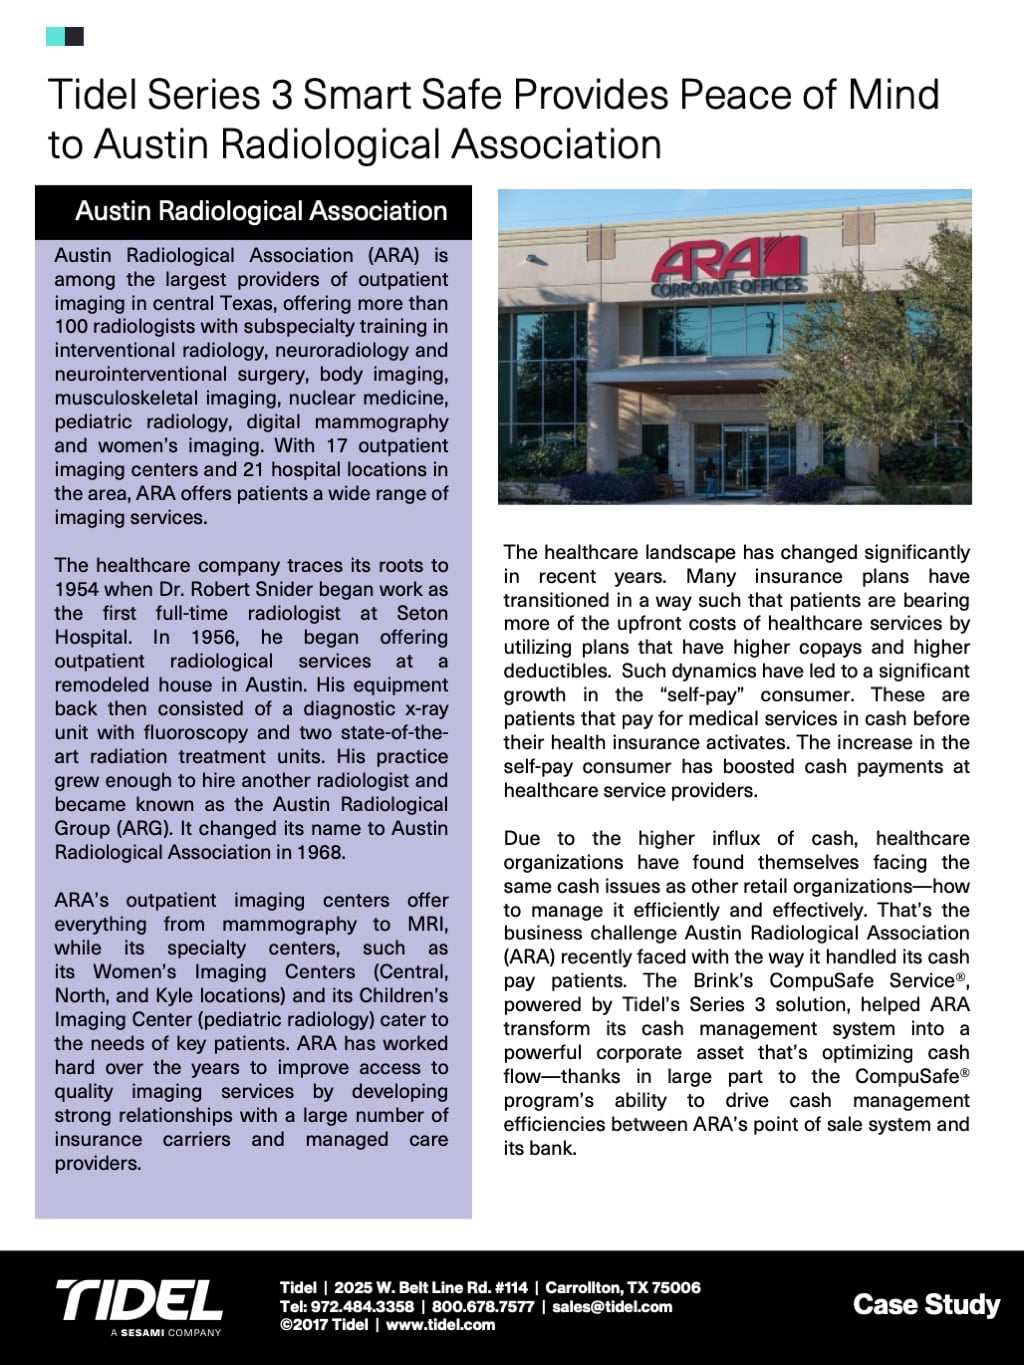 Case Study – Austin Radiological Association